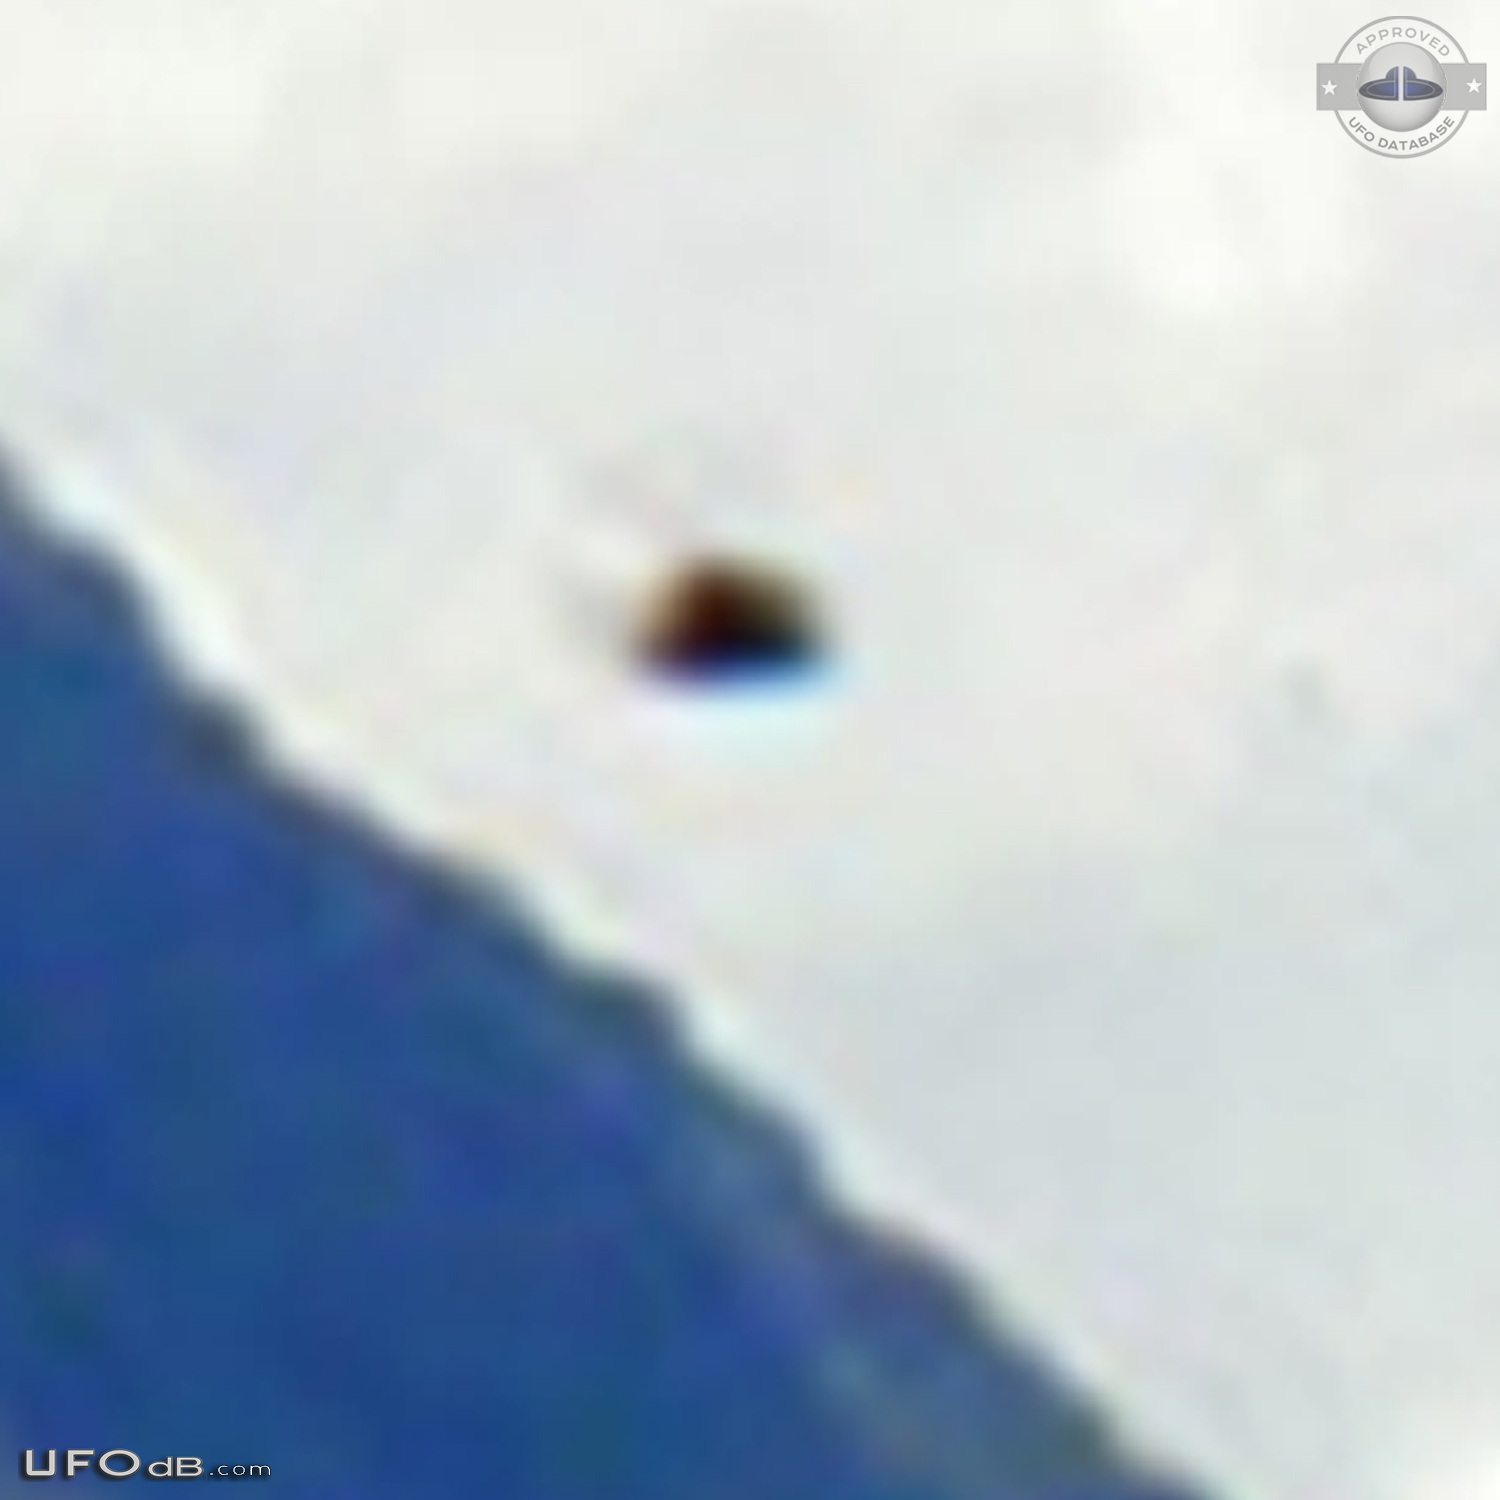 UFO sighting near Humboldt Mountains Glenorchy New Zealand 2015 UFO Picture #662-5